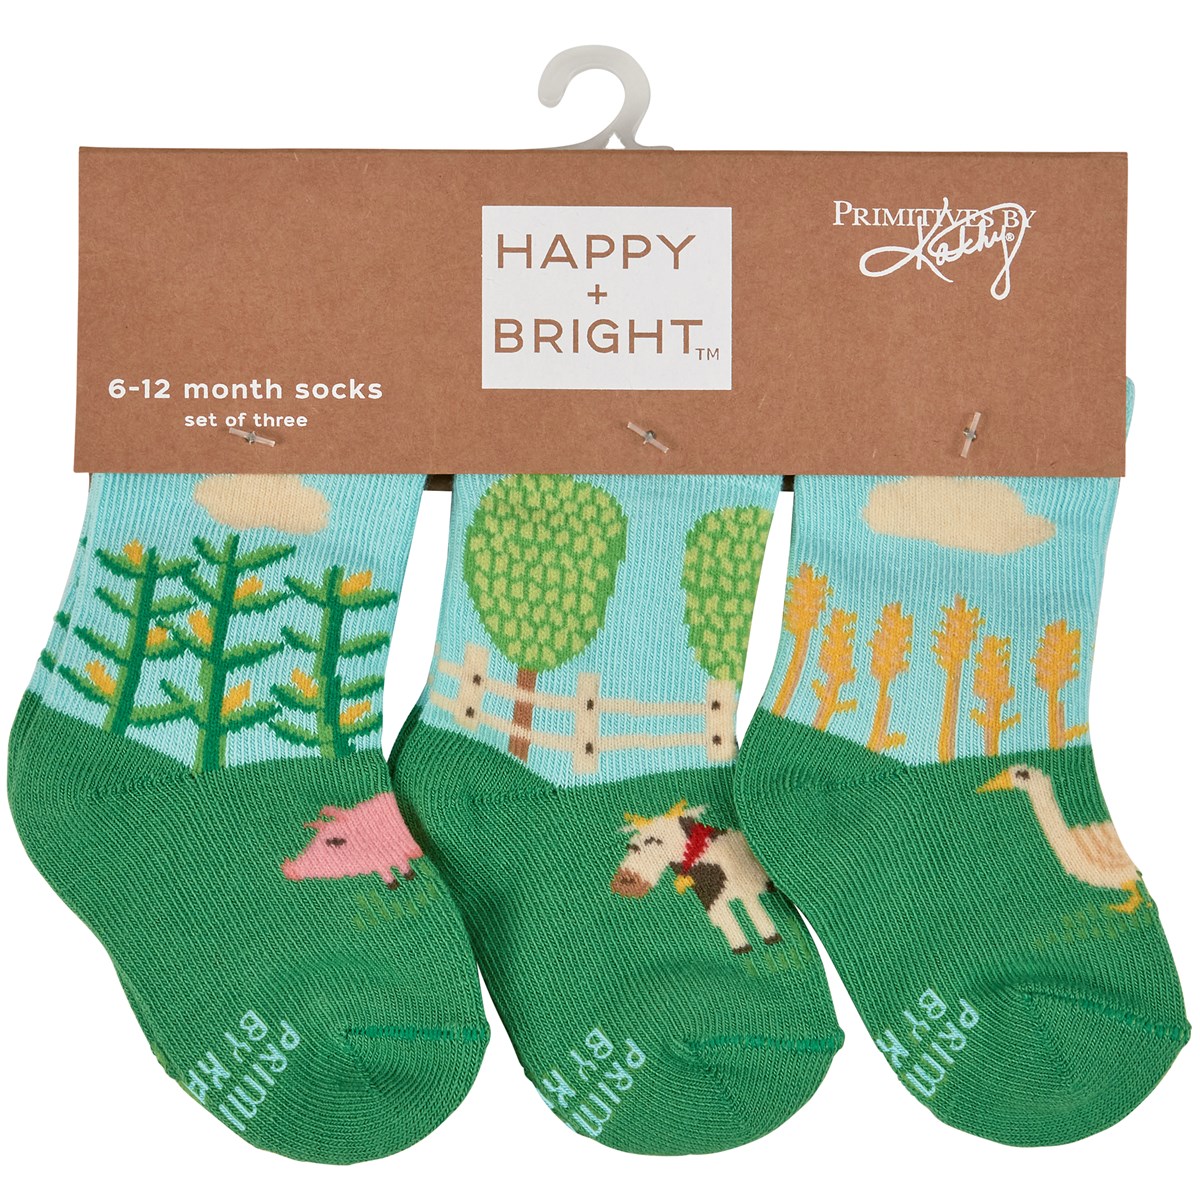 Little Farm Baby Sock Set - Cotton, Nylon, Spandex